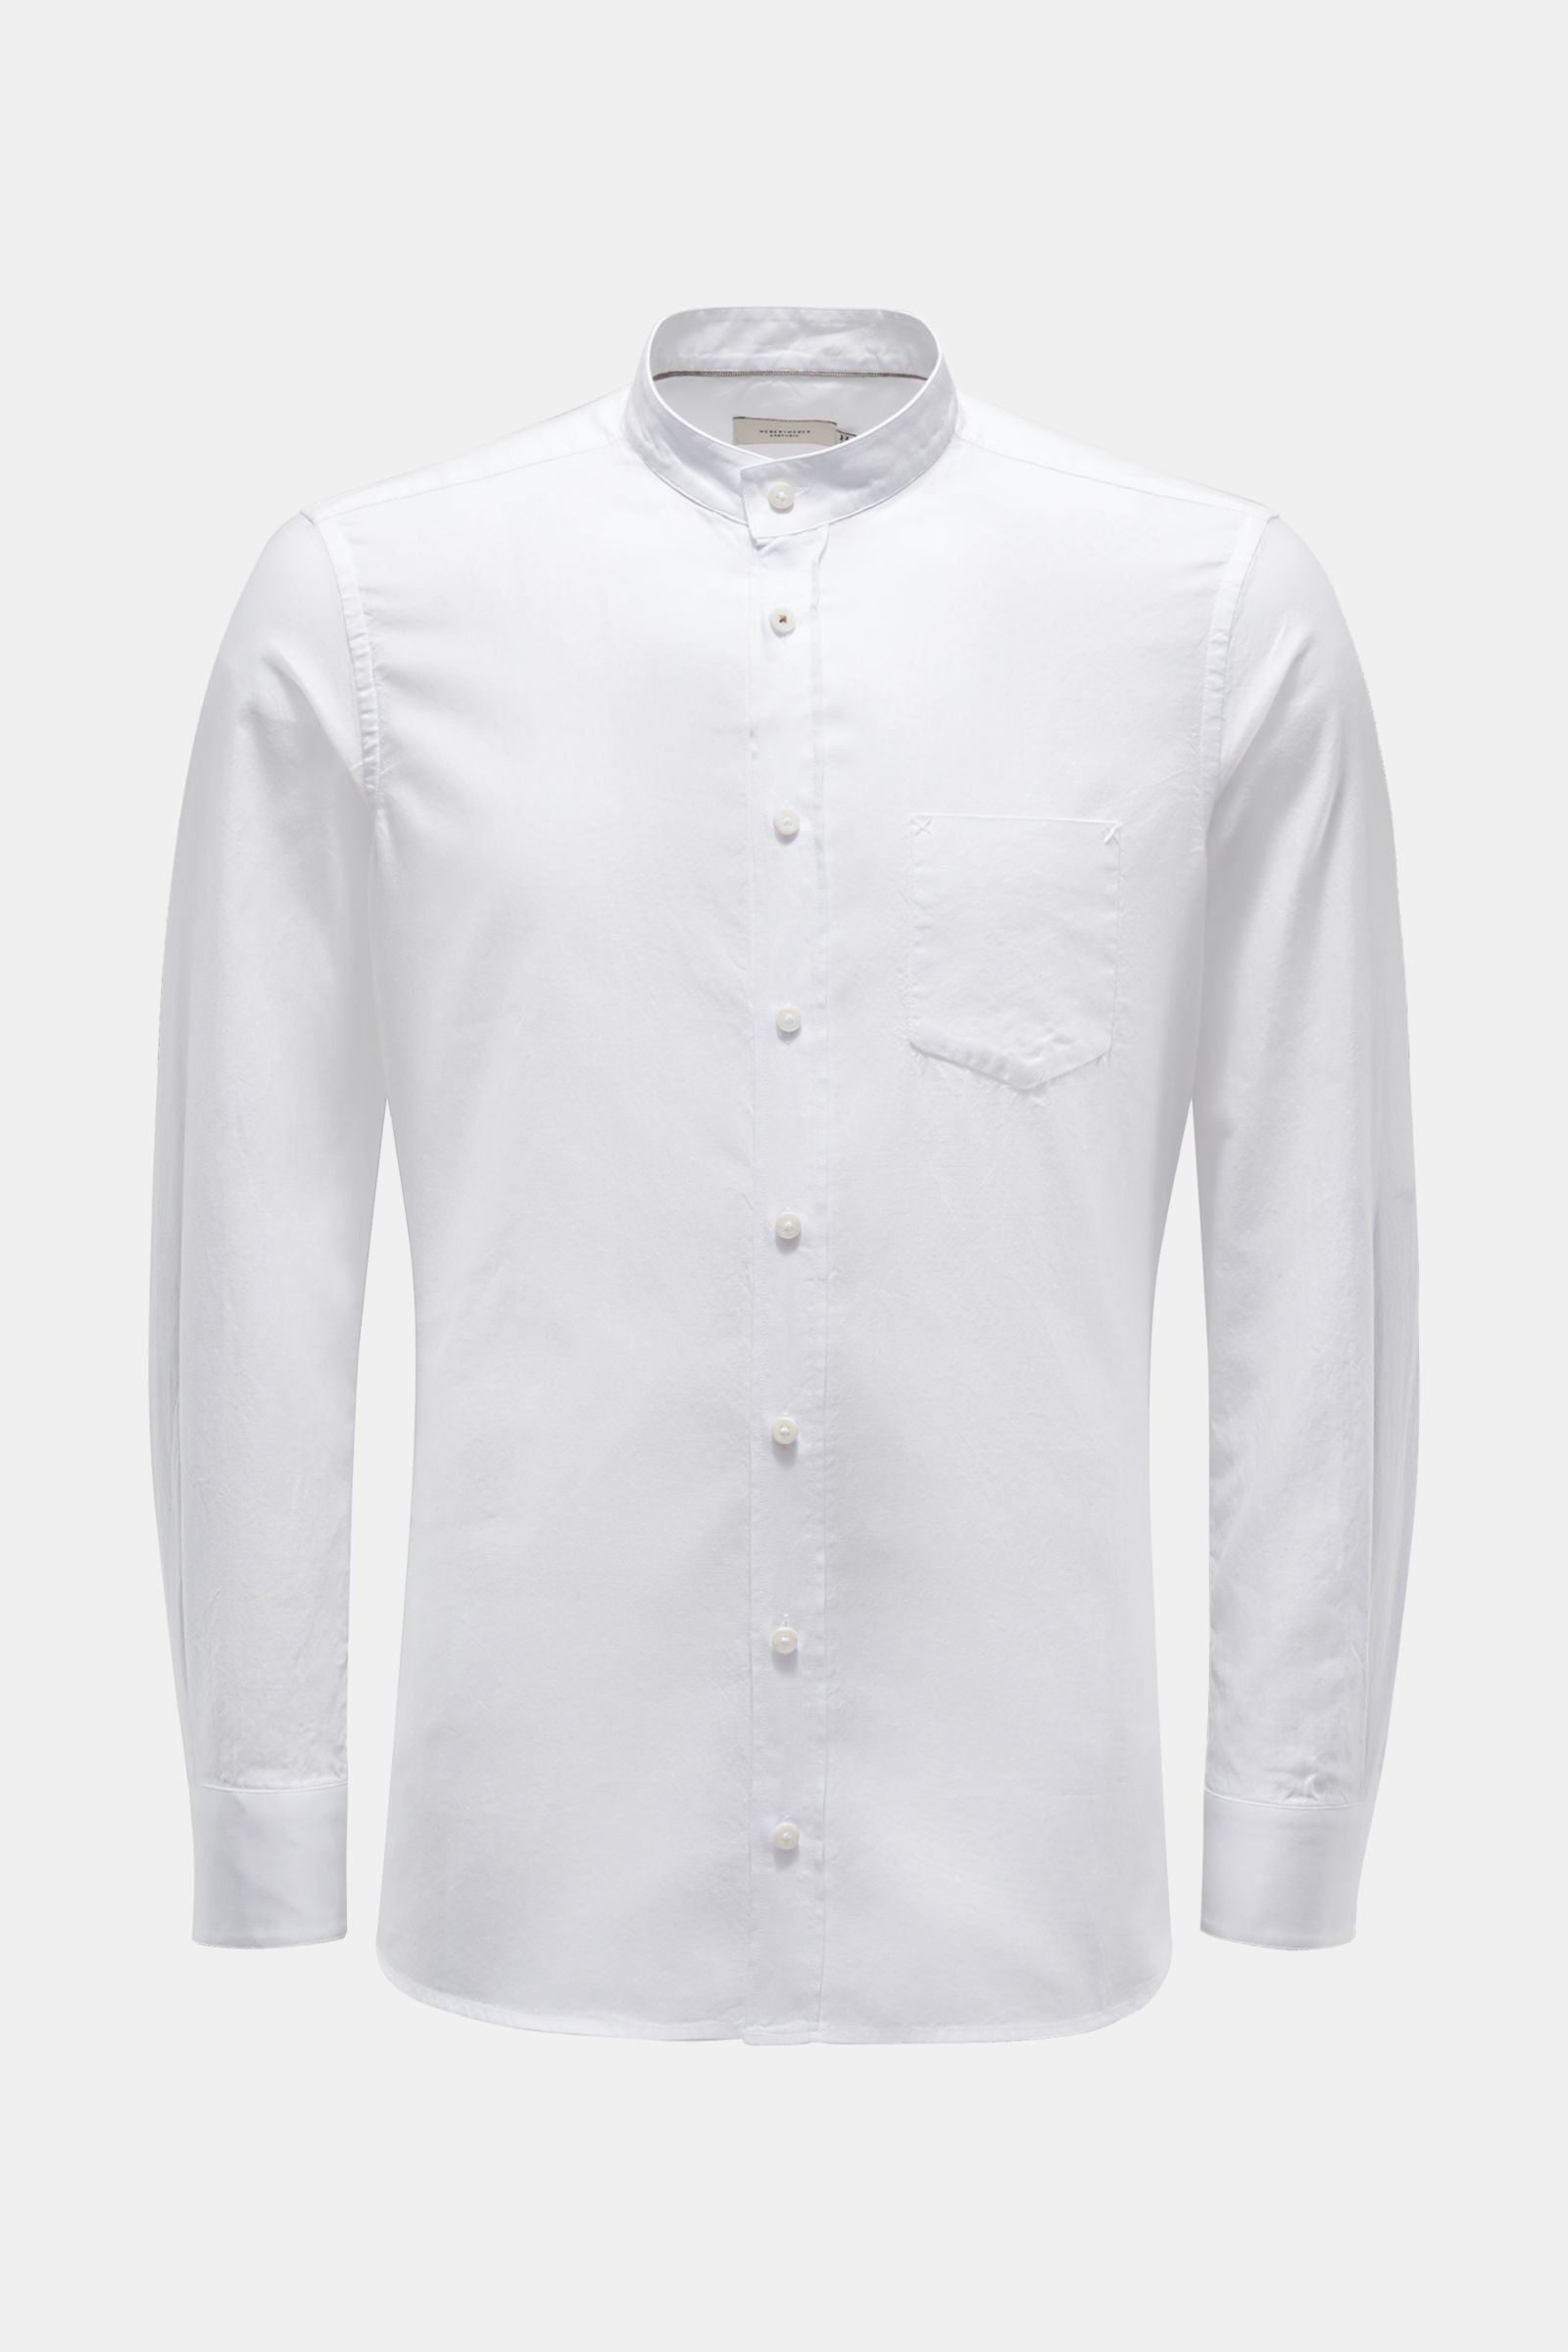 Oxford shirt grandad collar white